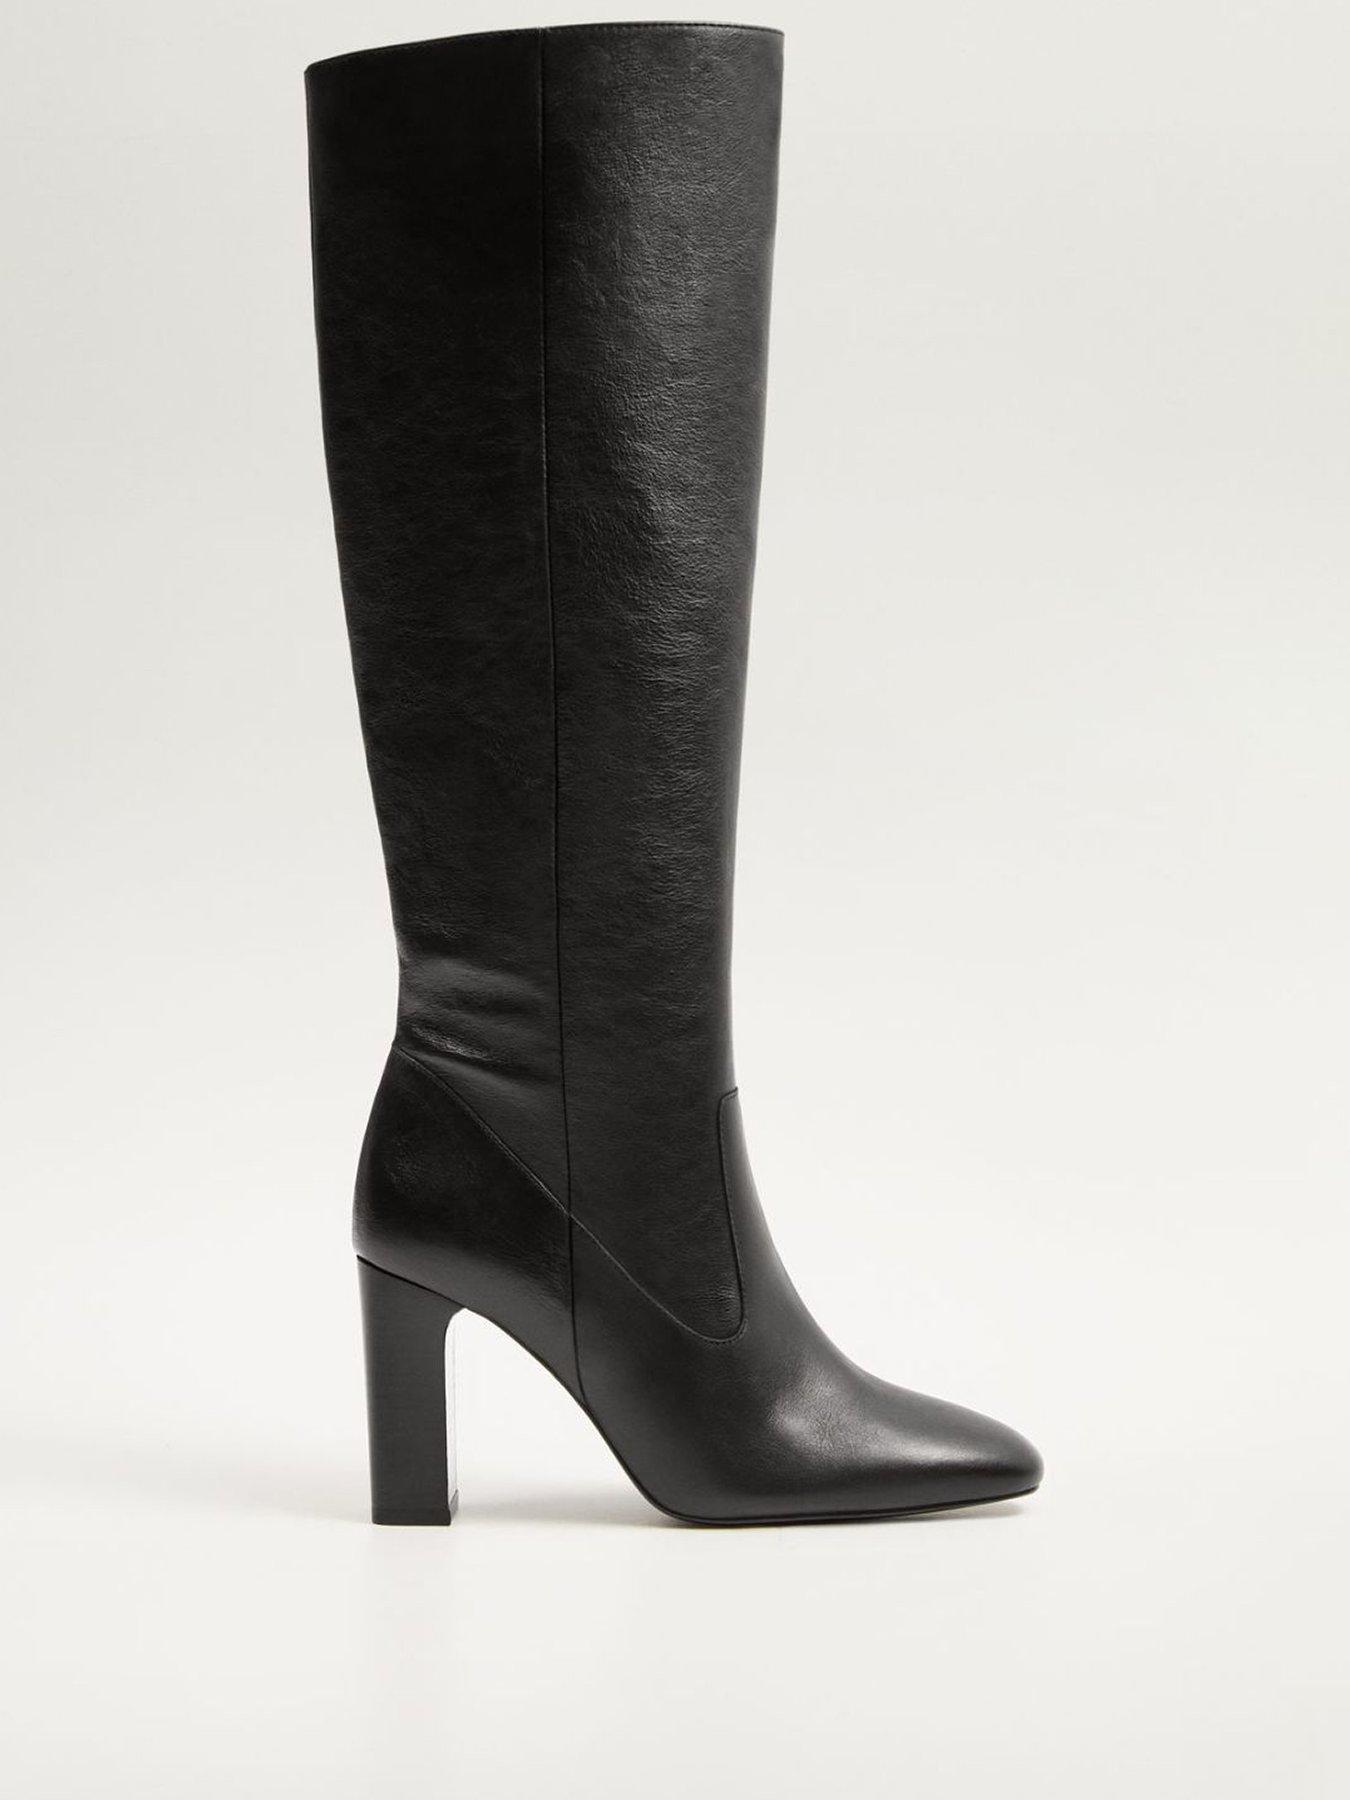 black leather knee boots uk